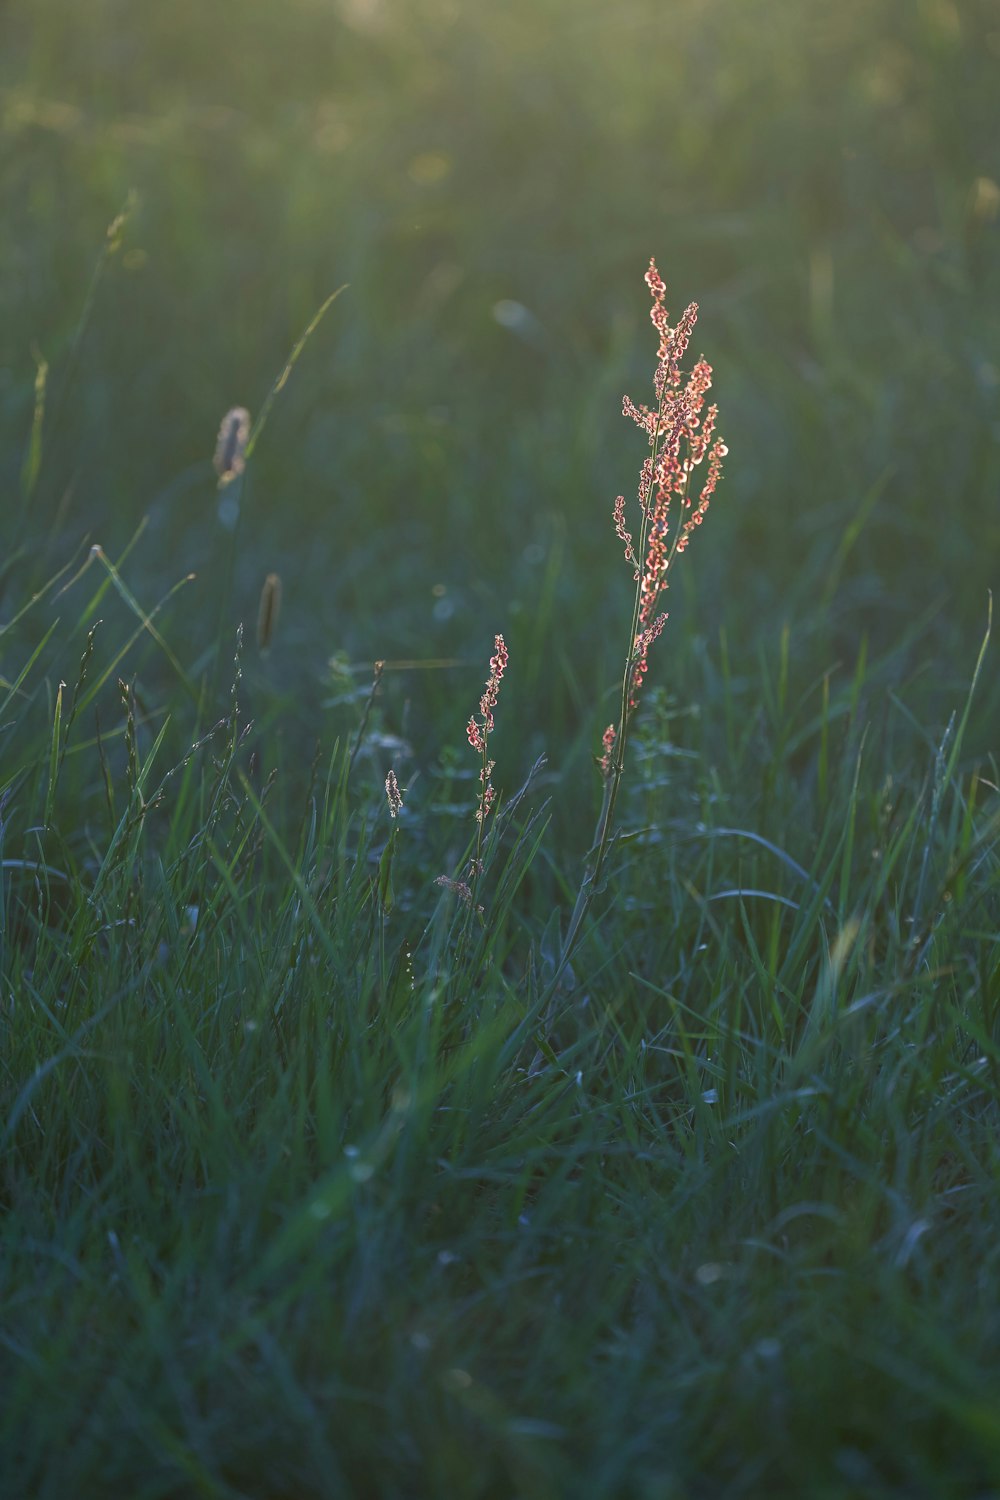 brown flower on green grass field during daytime